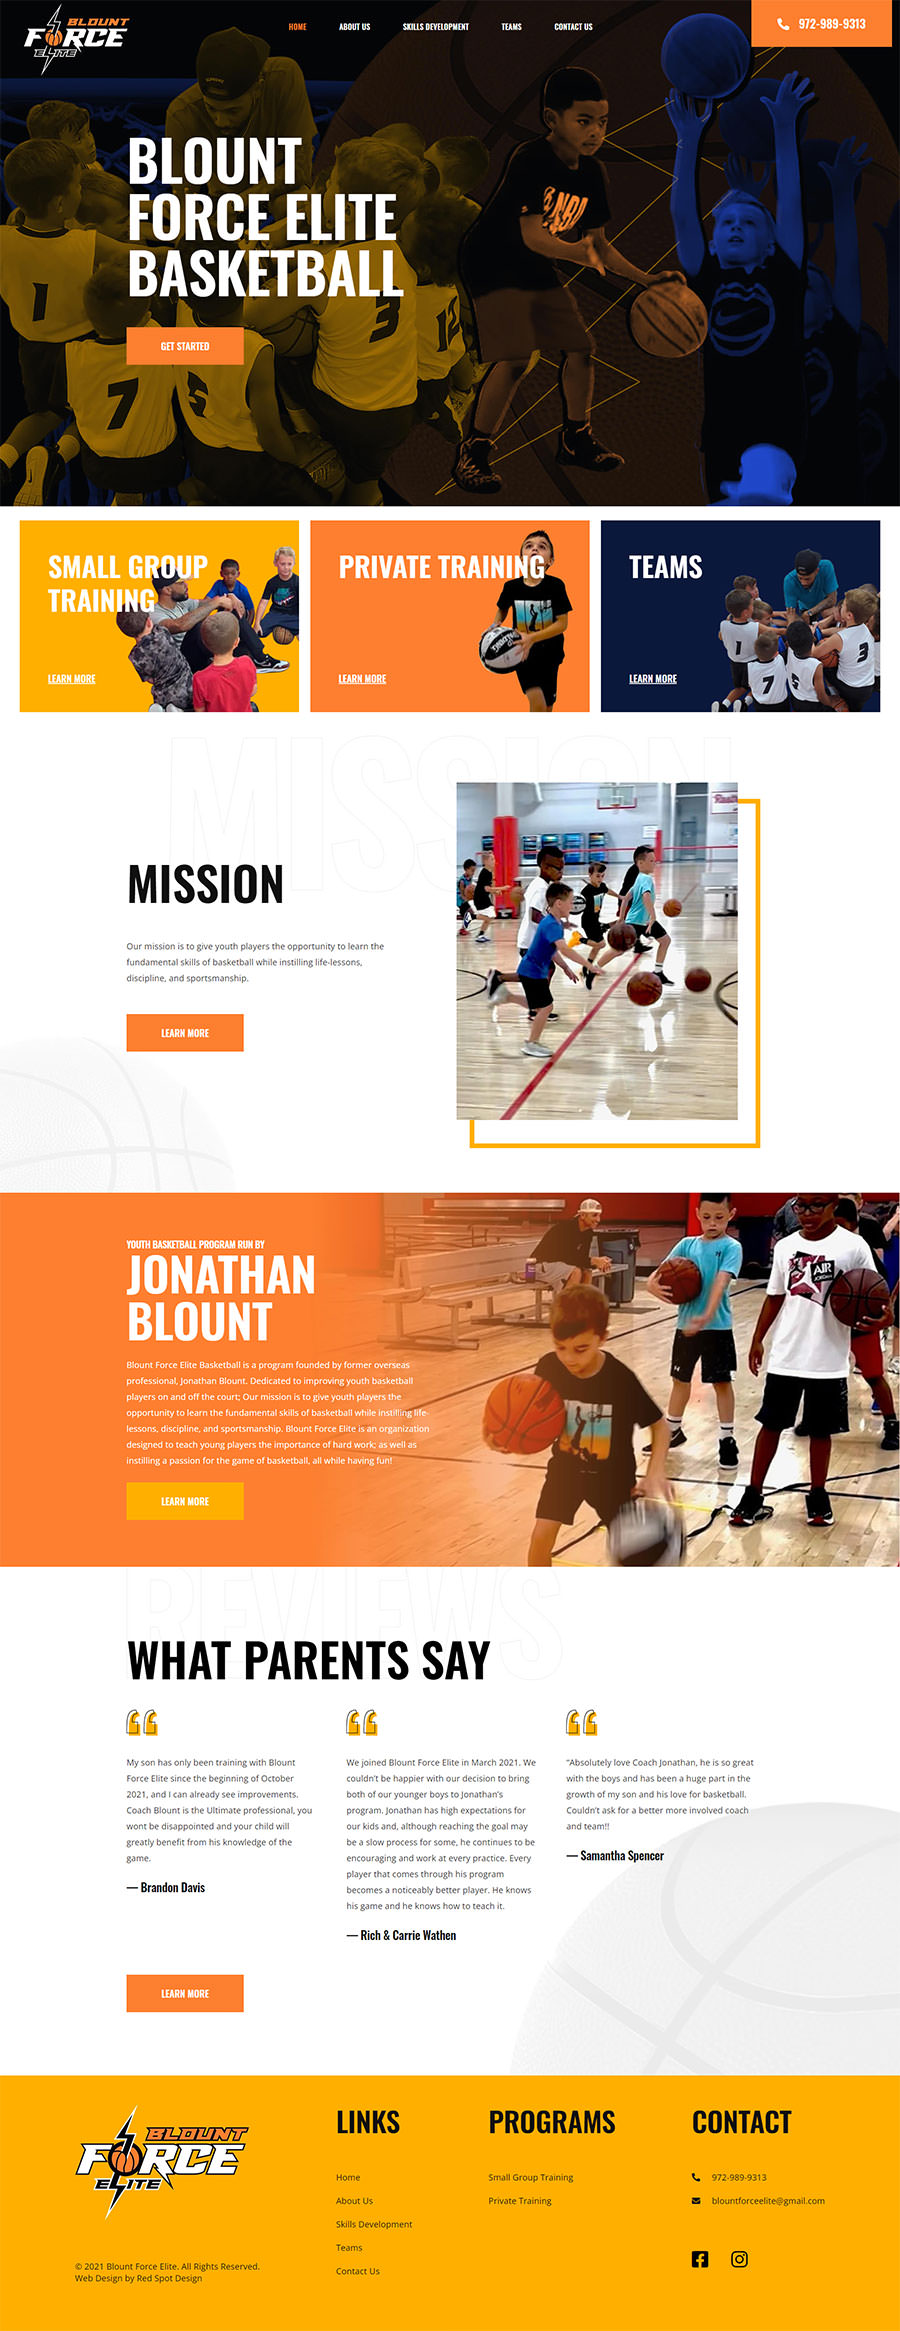 web design for blount force elite basketball training